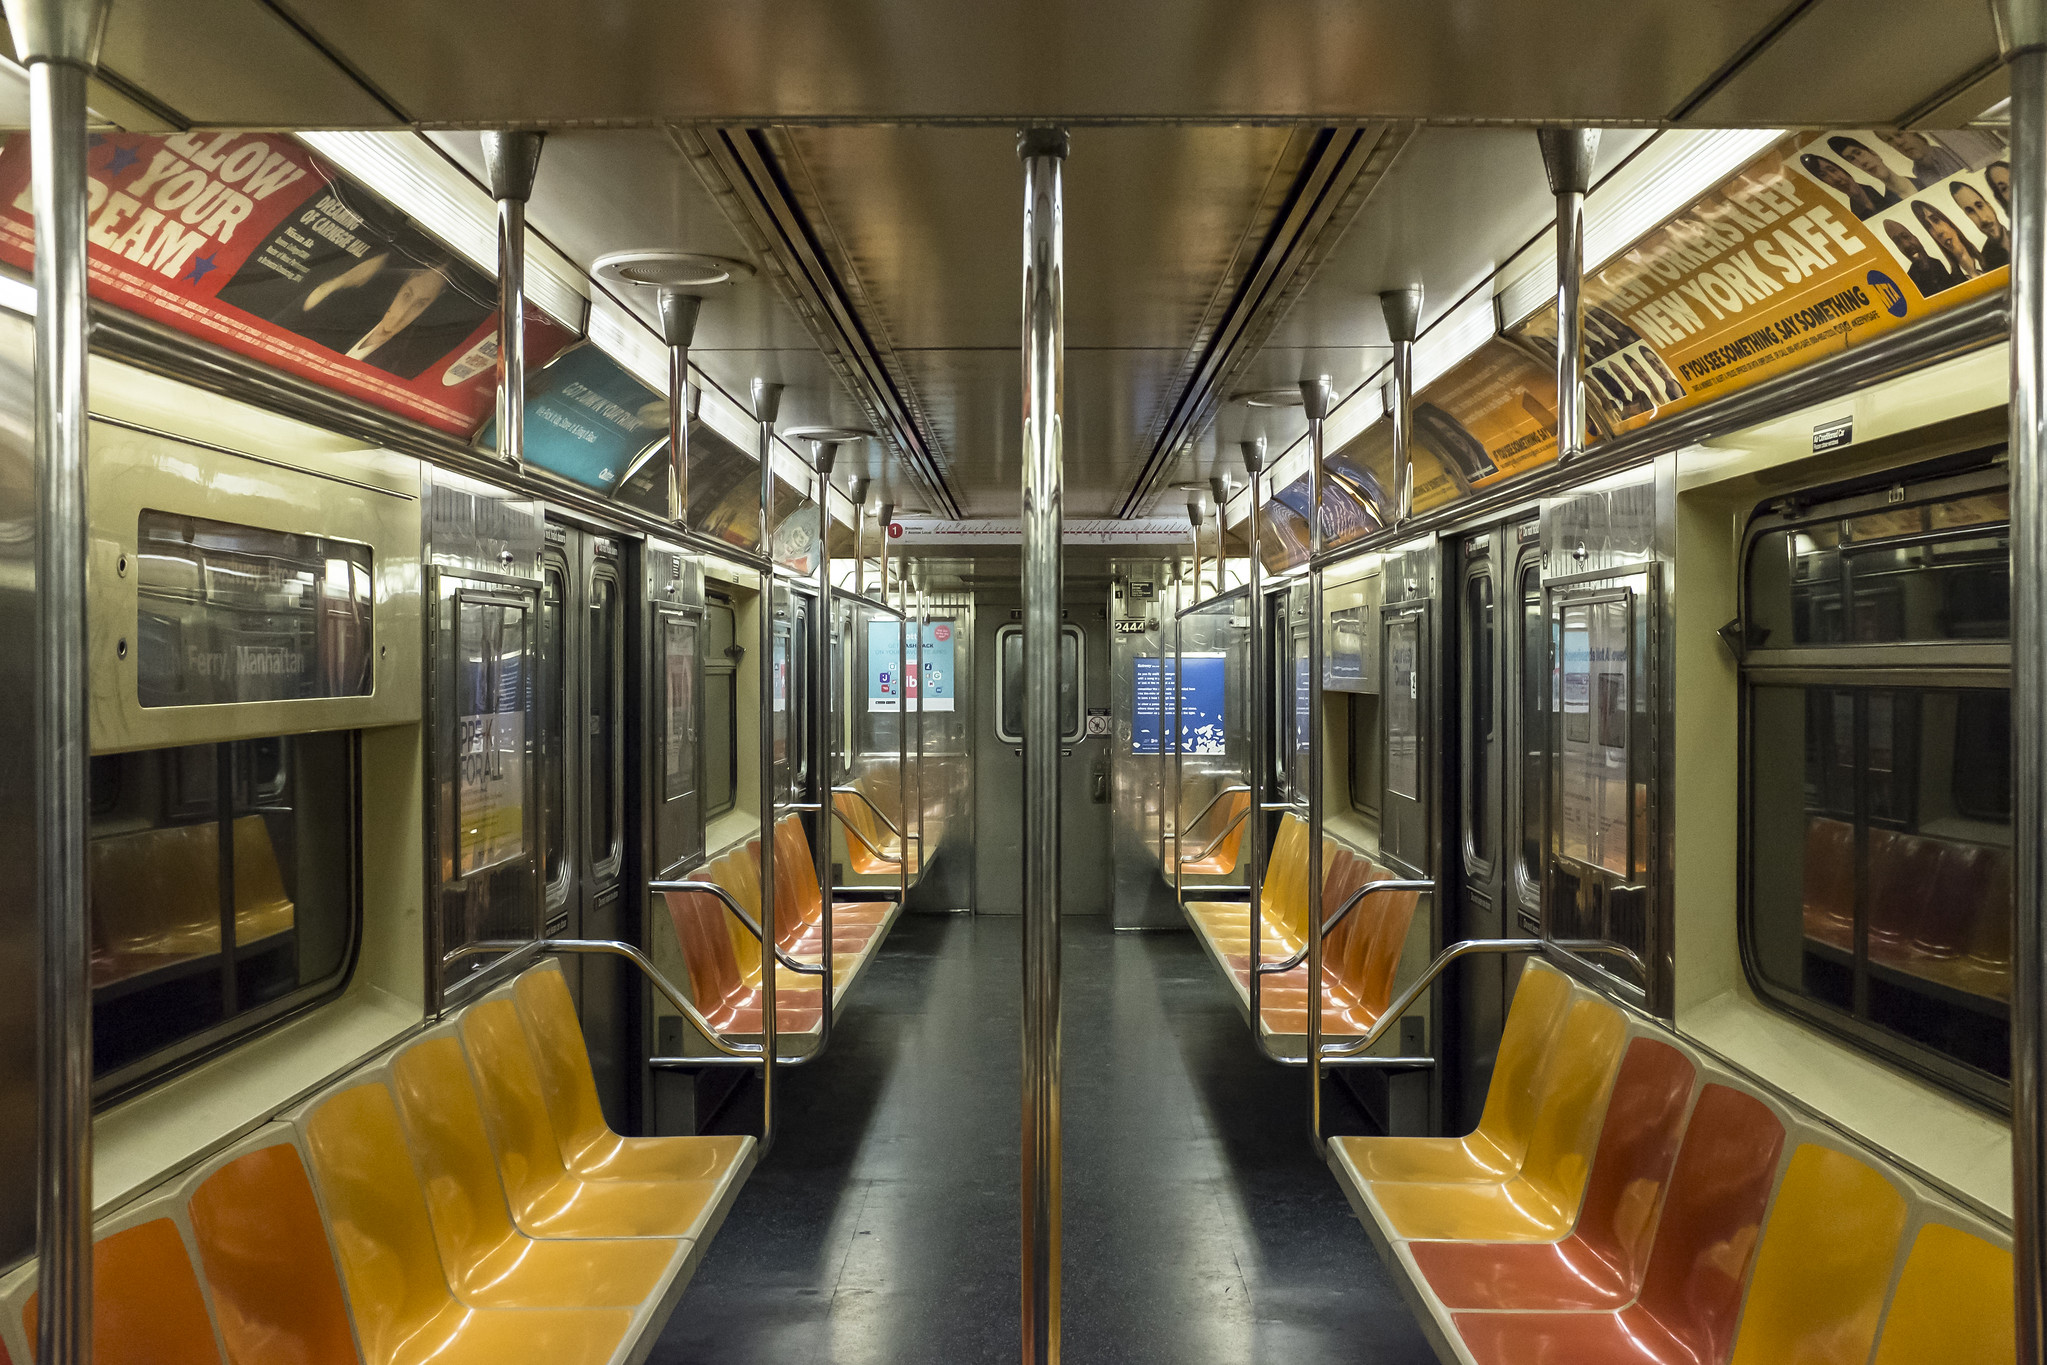 Amid coronavirus fears, subway ridership falls 20% while Citi Bike sees a 70% increase